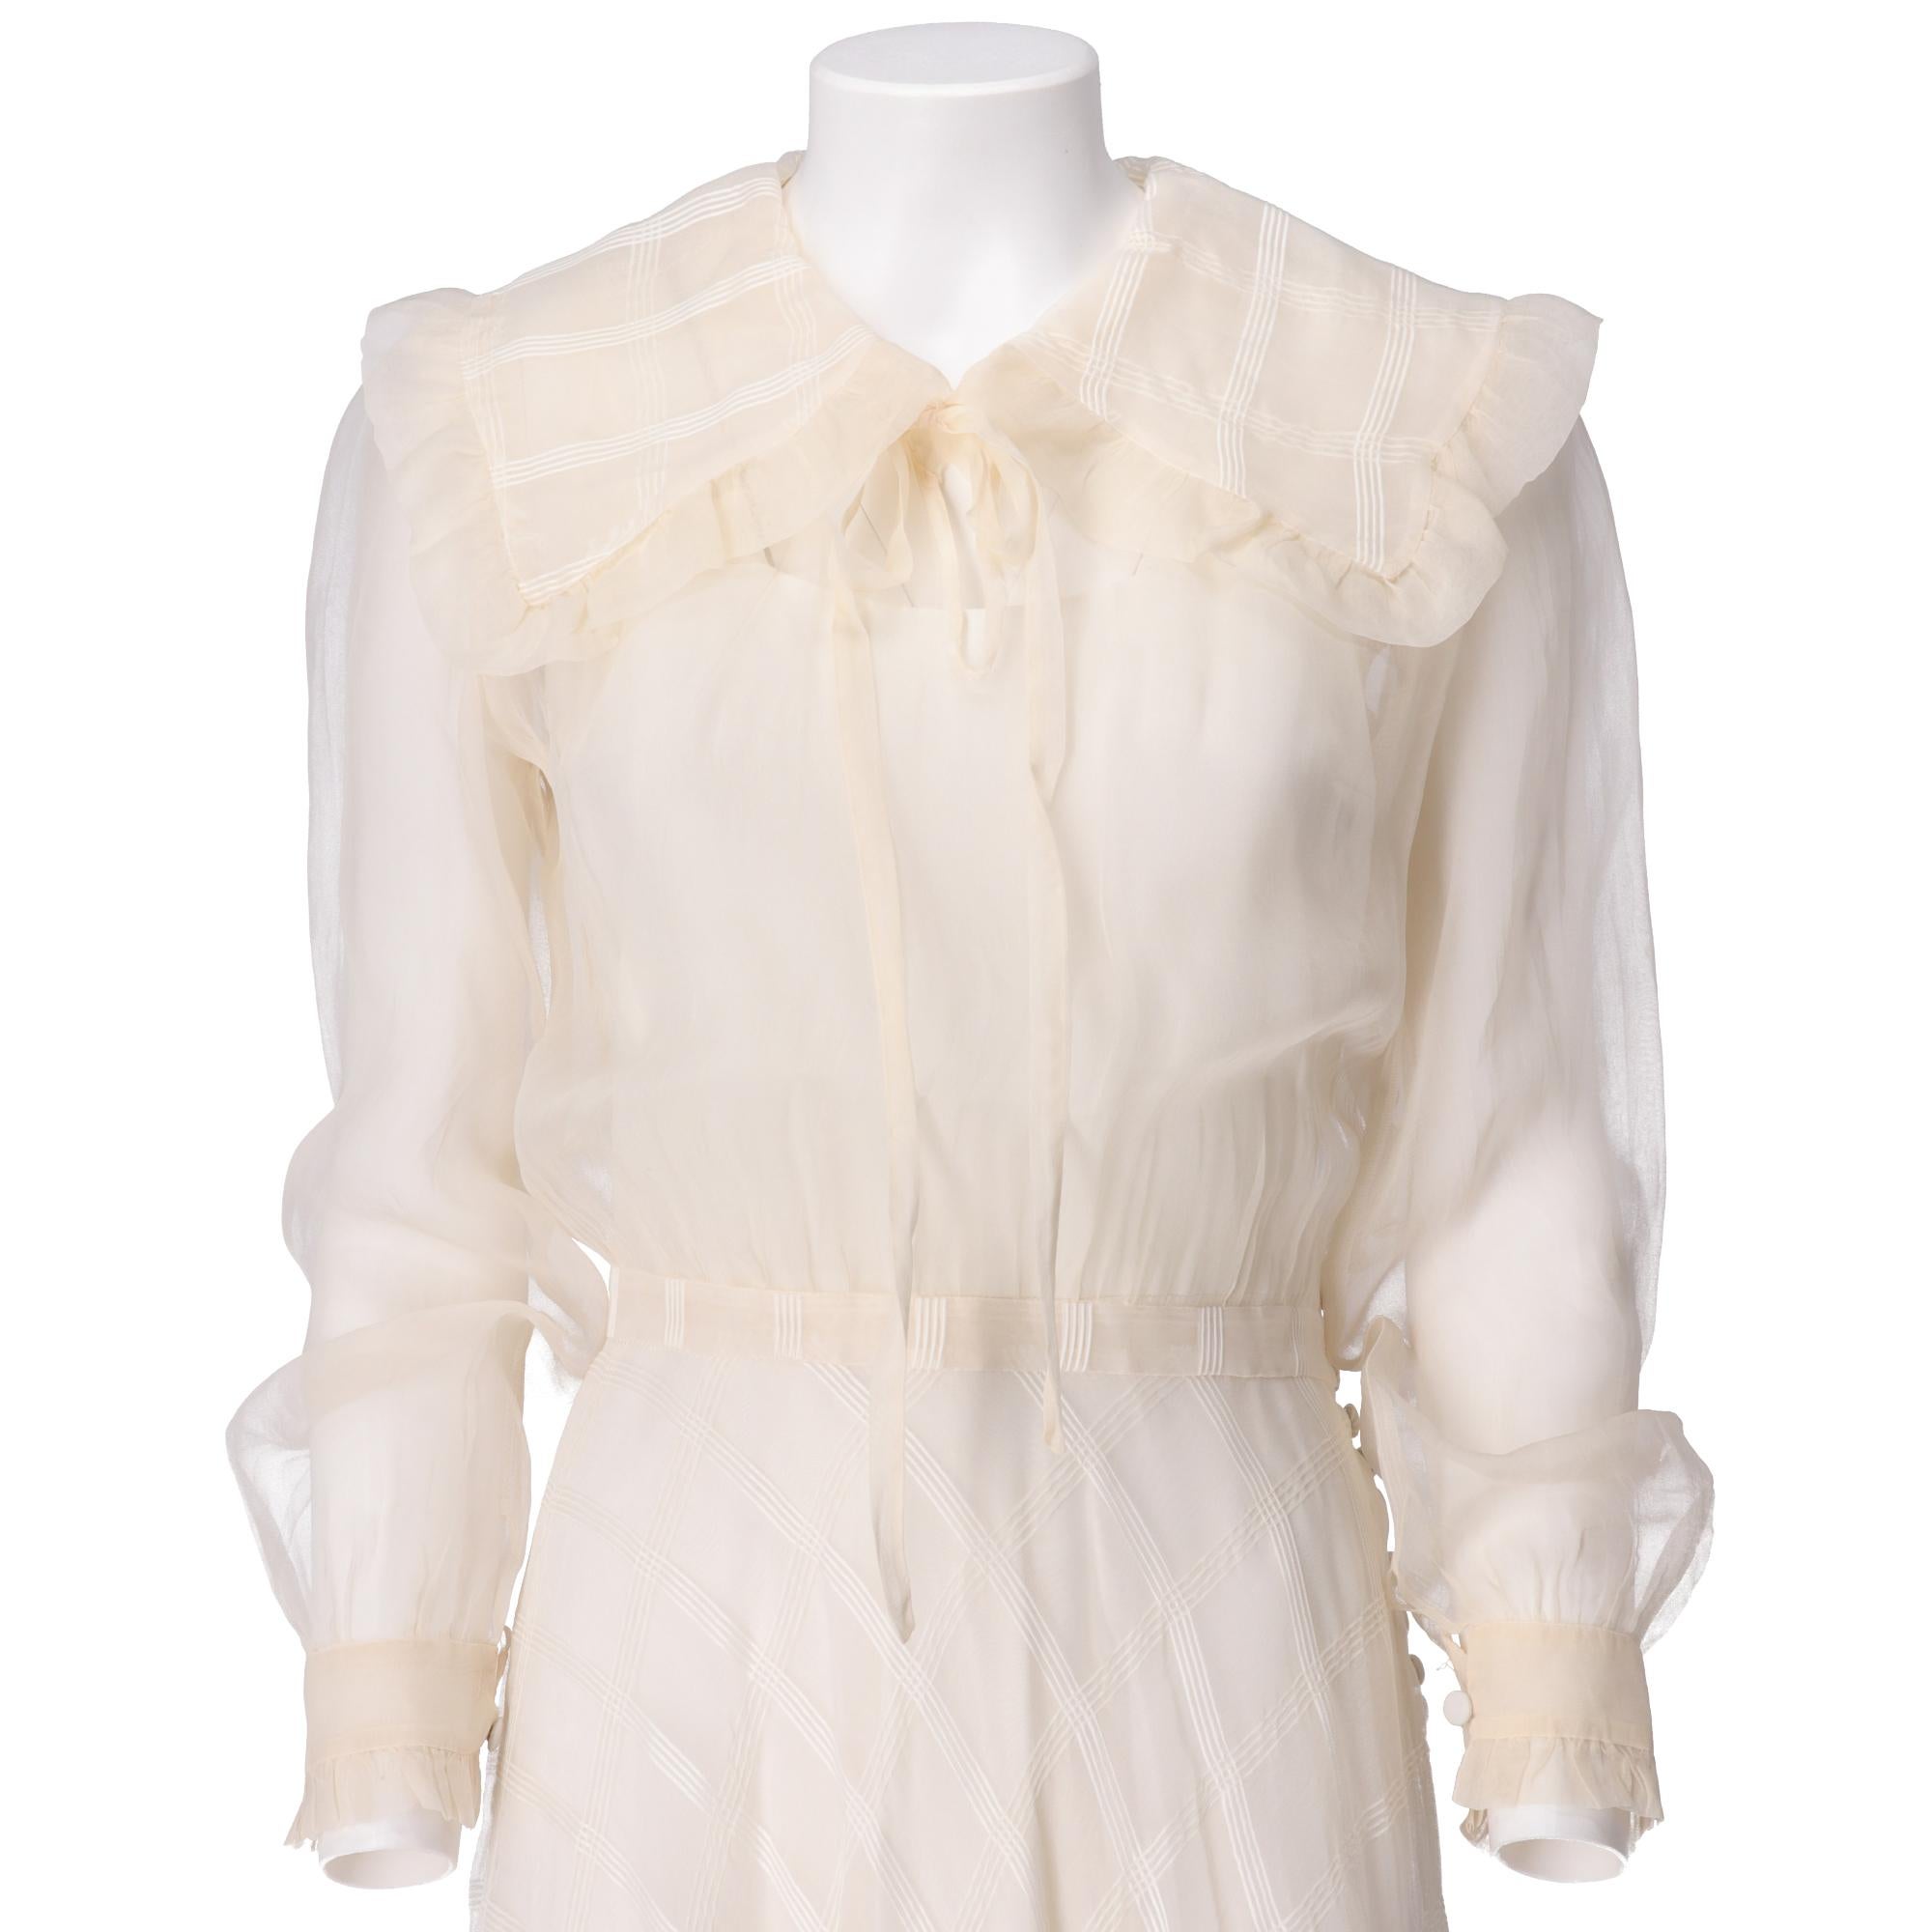 Women's 1970s Tailored Semitransparent Wedding Dress